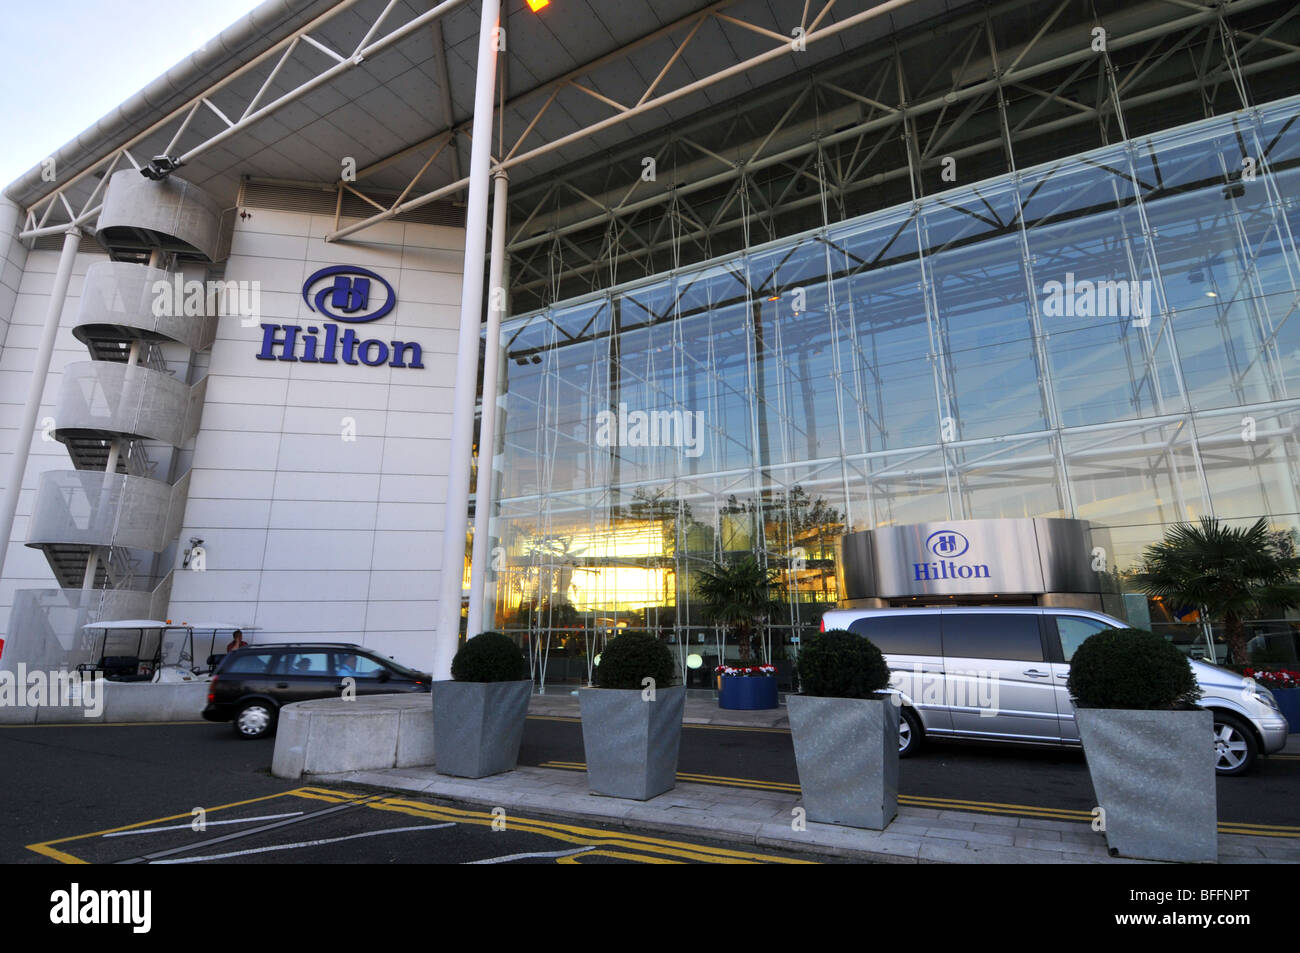 Hilton Hotel in Heathrow, London, England Stockfoto